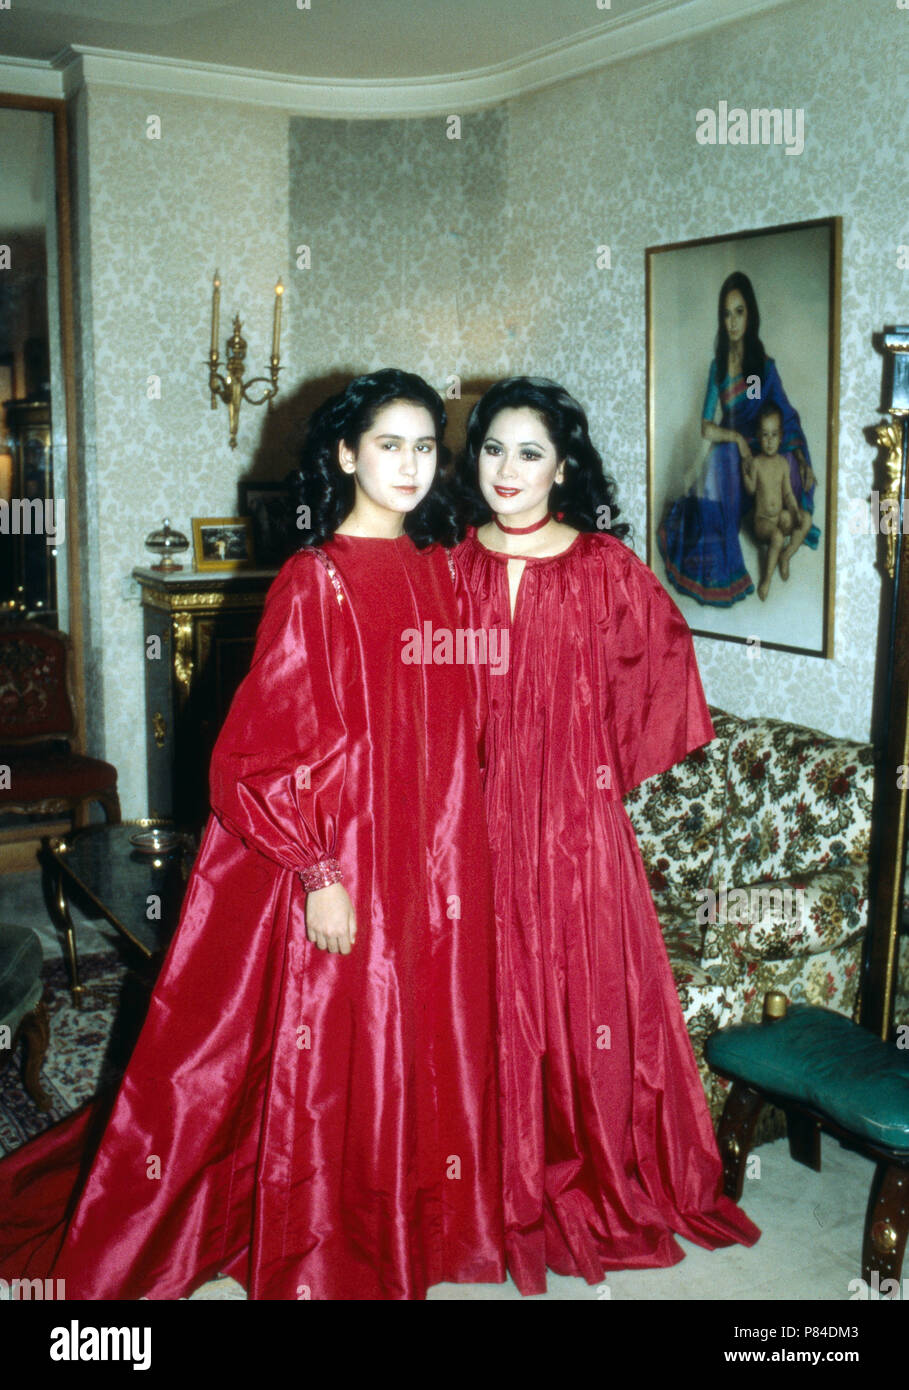 Ratna Sari Dewi Sukarno mit Tochter Kartika Carina in Paris, Frankreich 1980er Jahre. Ratna Sari Dewi Sukarno with daughter Kartika Carina at Paris, France 1980s. Stock Photo